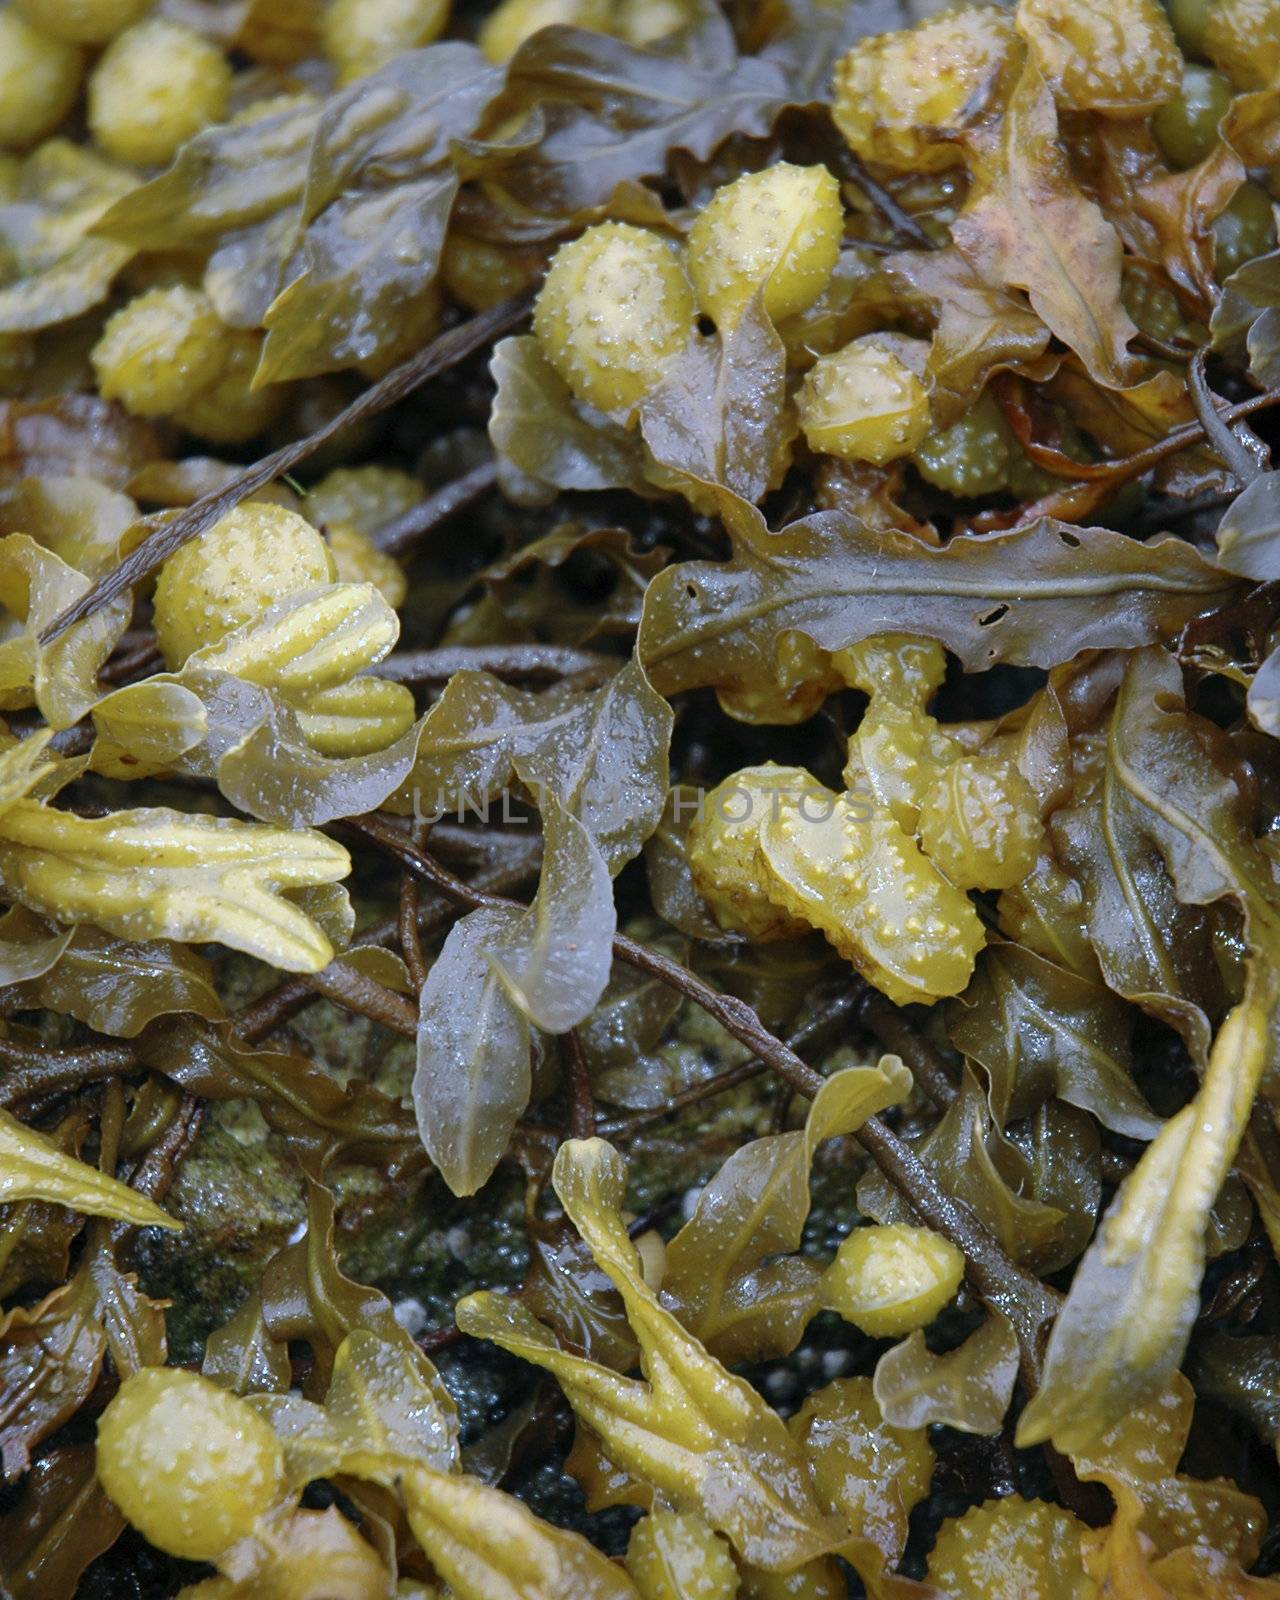 A clump of bladderwrack seaweed